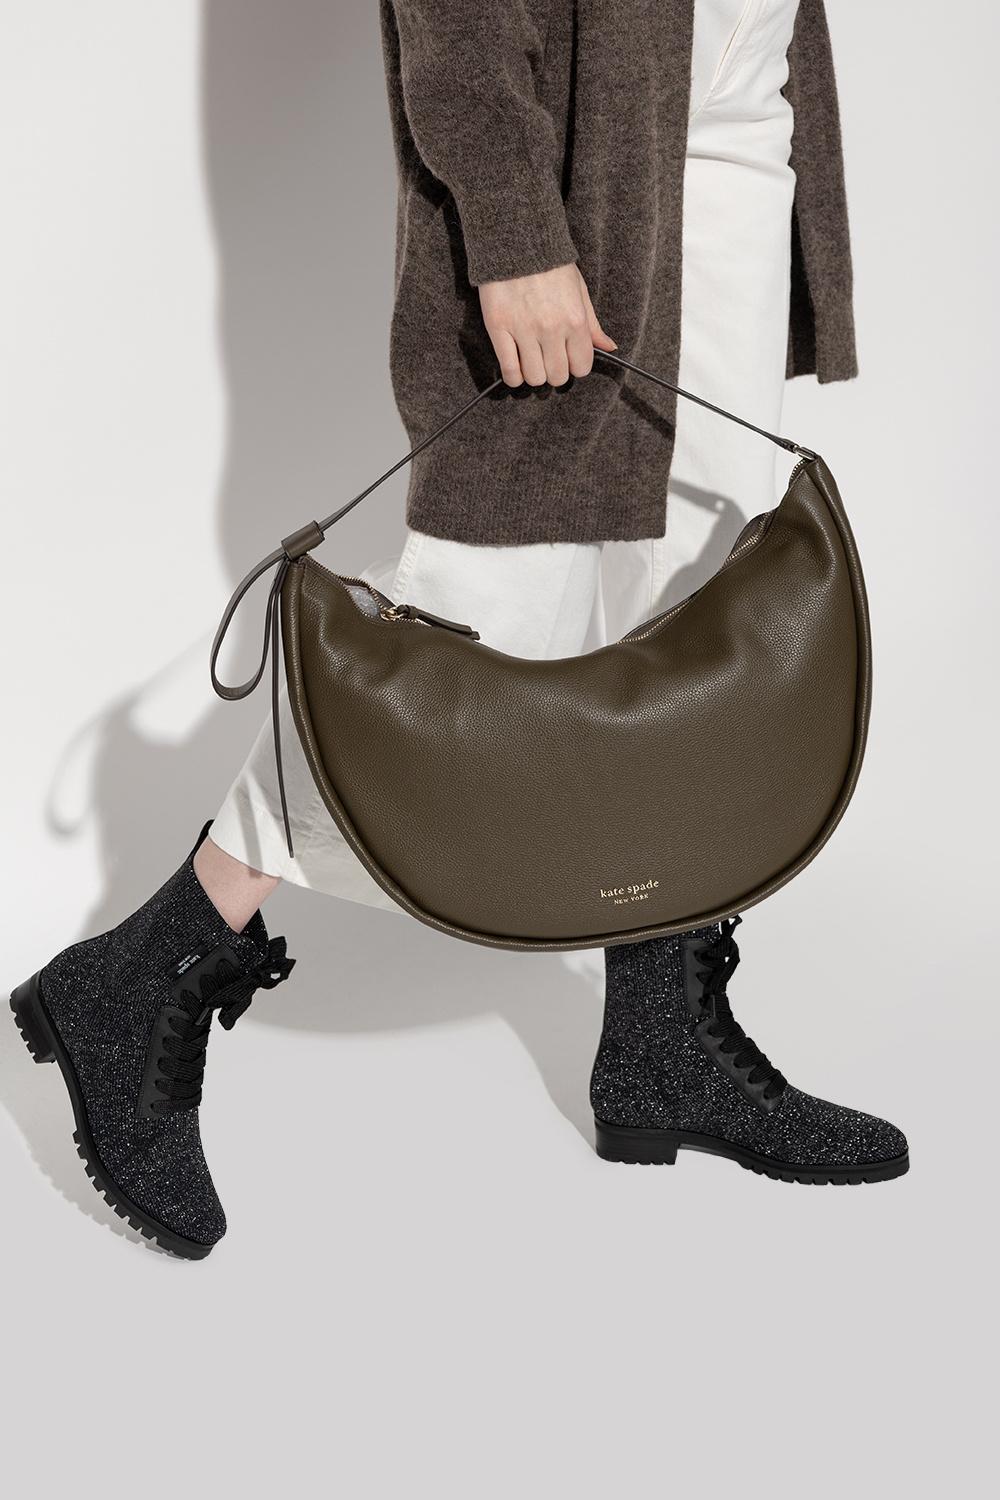 S-ZONE Genuine Leather Tote Bag Large Shoulder Purse Work Vintage Handbag  for Women, Dark Brownbrown, Large, 1 : Amazon.in: Shoes & Handbags